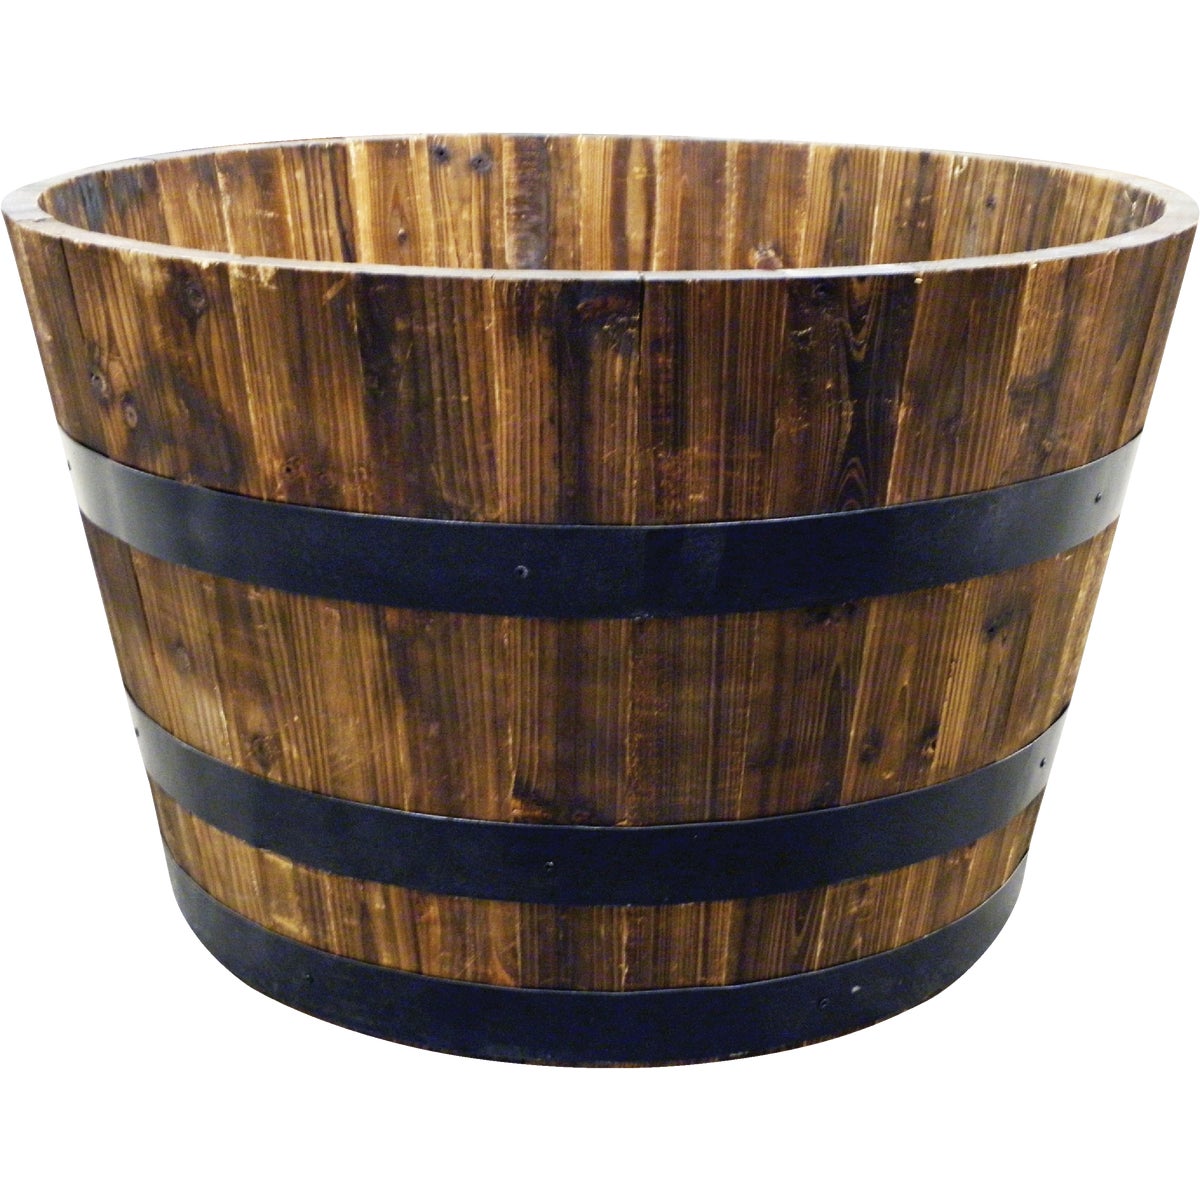 Item 704178, Half barrel whiskey style large capacity planter.